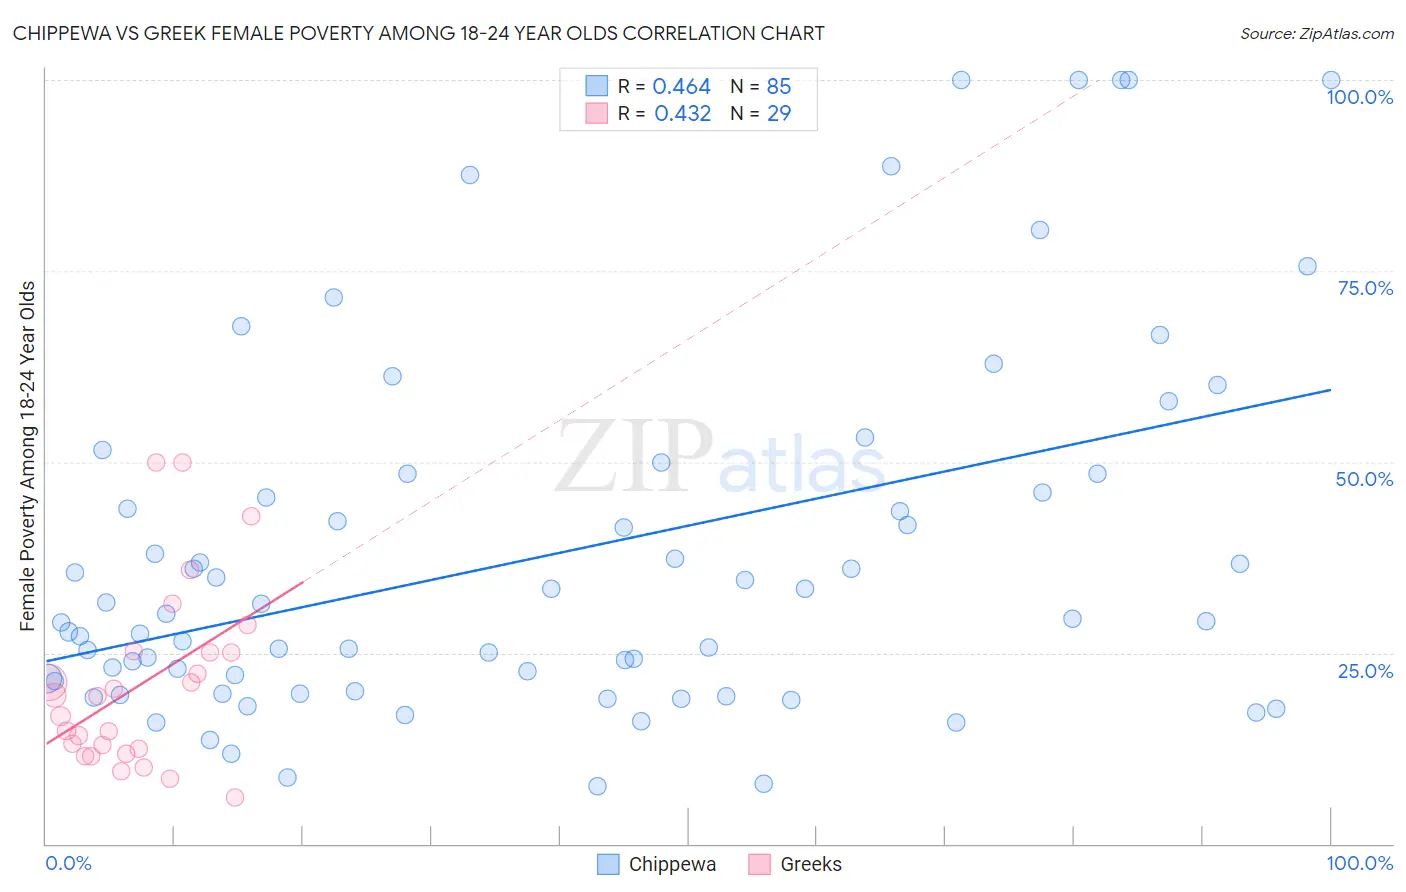 Chippewa vs Greek Female Poverty Among 18-24 Year Olds